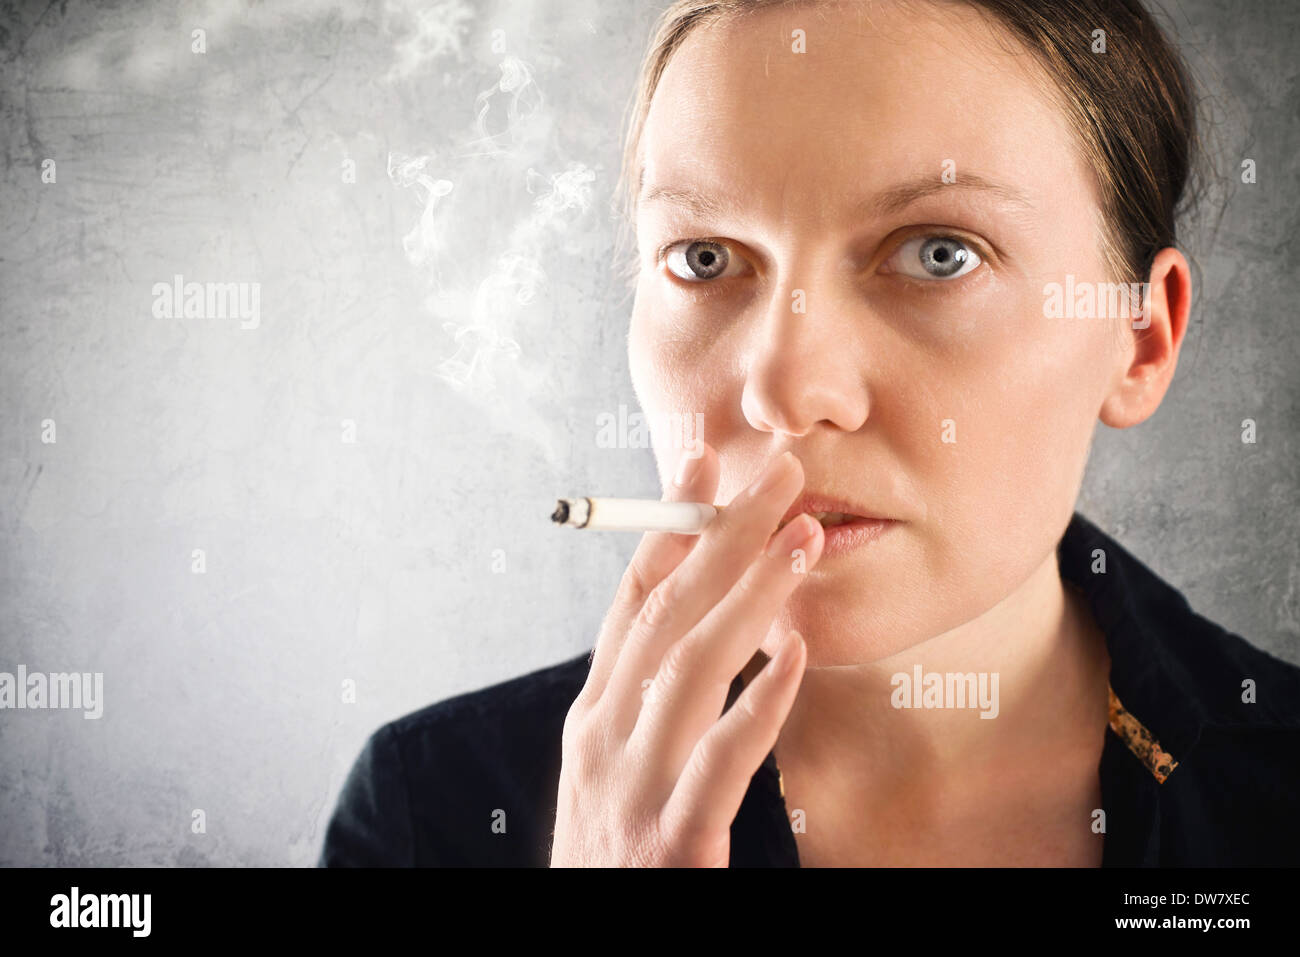 Beautiful young woman smoking cigarette, close up portrait. Stock Photo